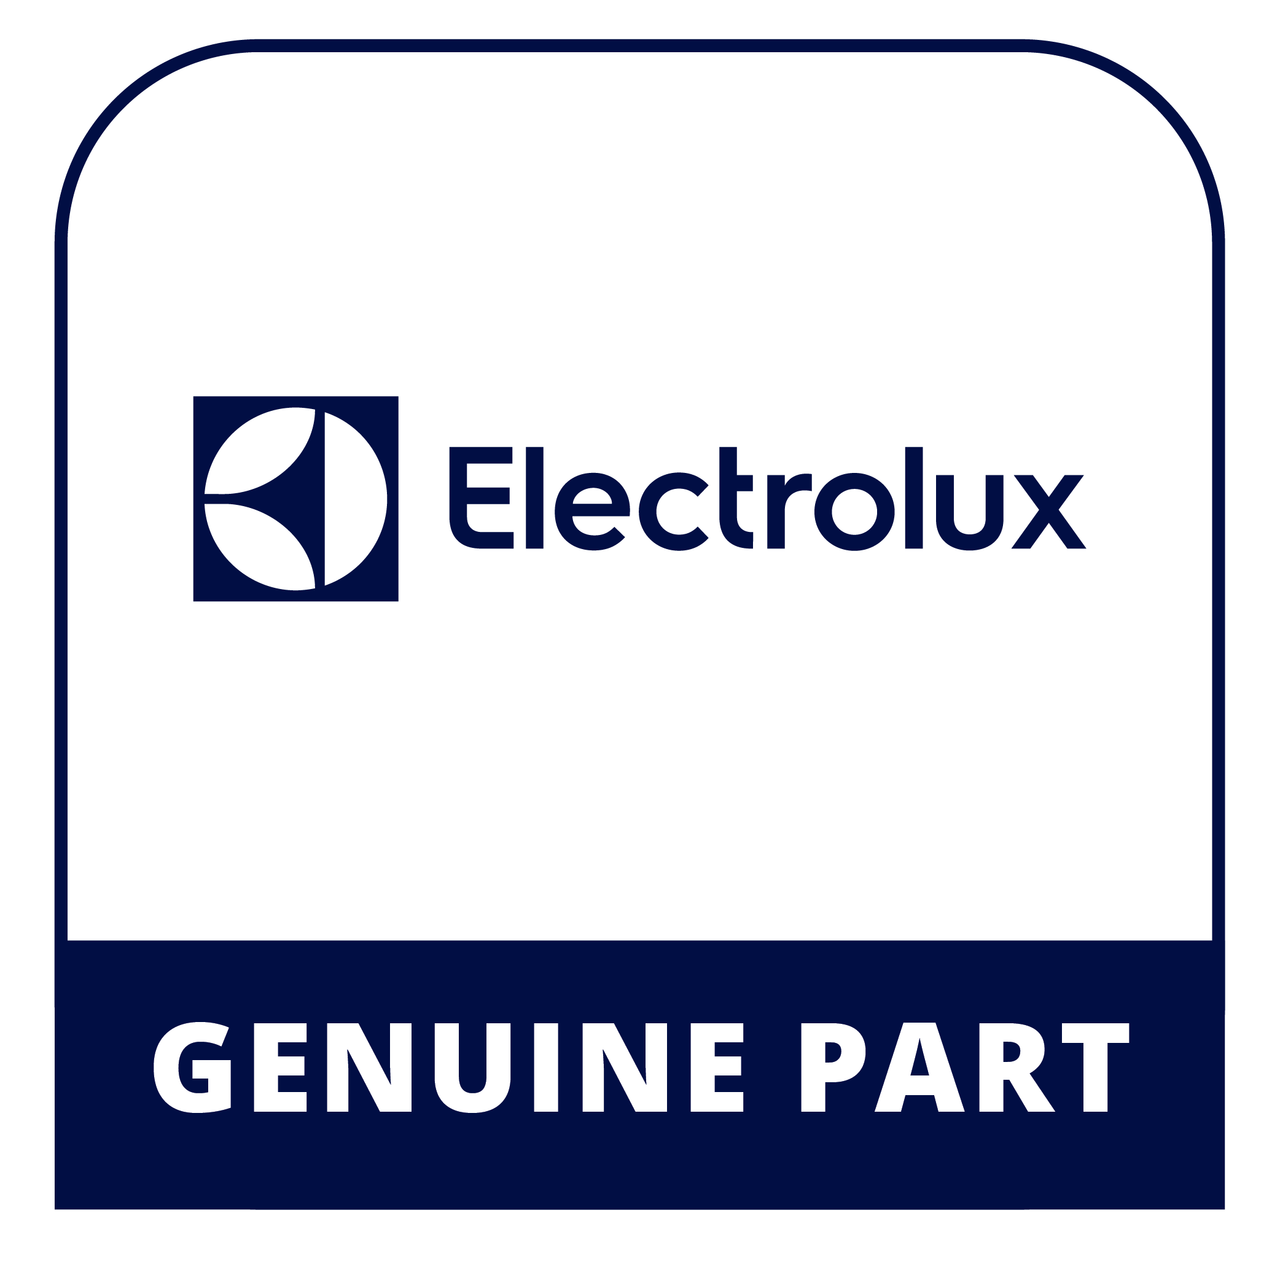 Frigidaire - Electrolux 140204159028 Channel - Genuine Electrolux Part